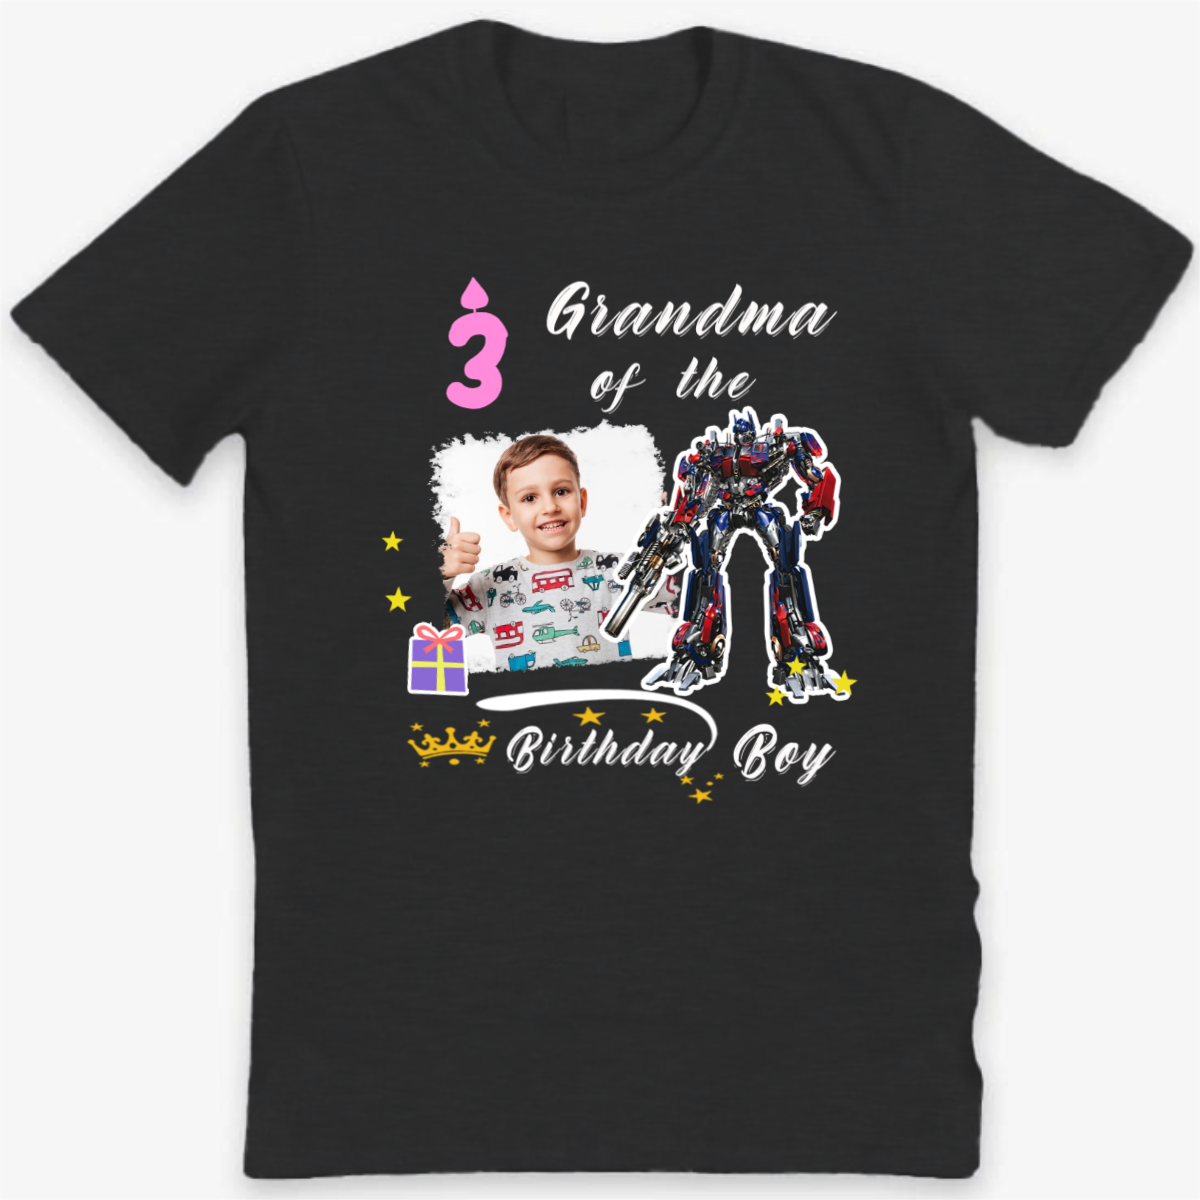 Birthday Boy/Girl Matching Birthday Family Tshirts Personalized Photo/Name/Age/Text